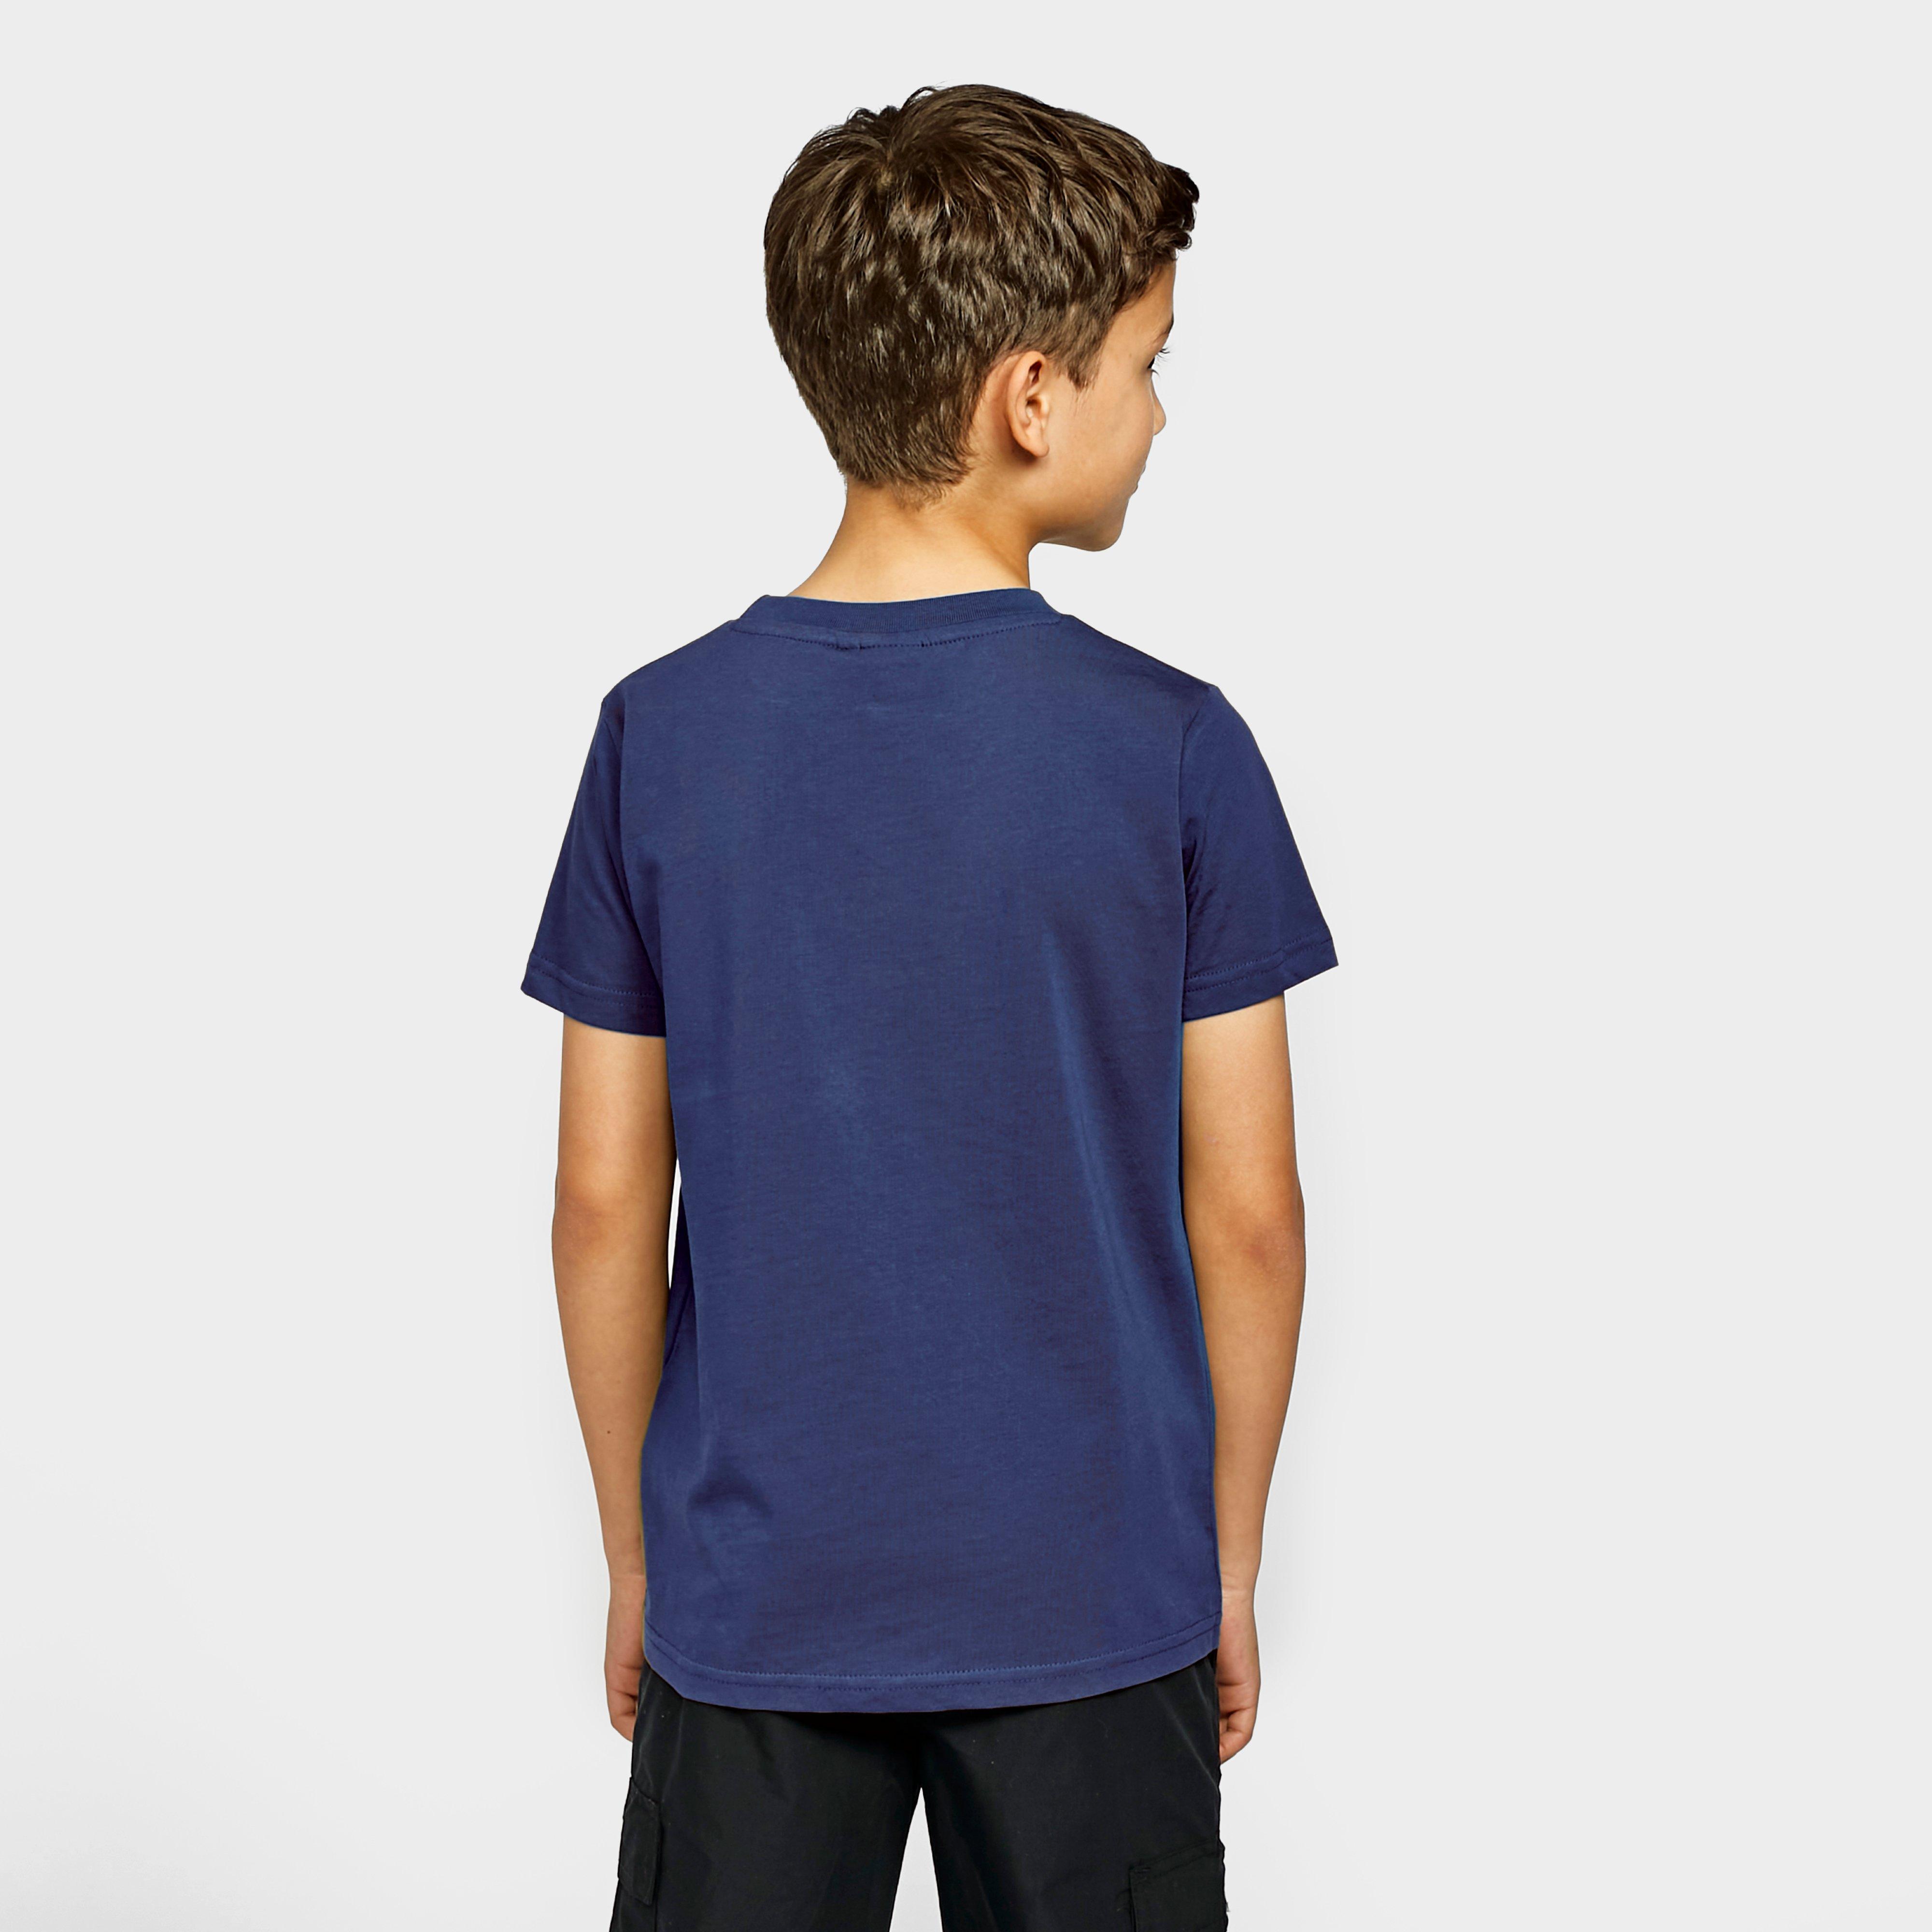 Craghoppers Kids’ Rubens Short Sleeved T-Shirt Review